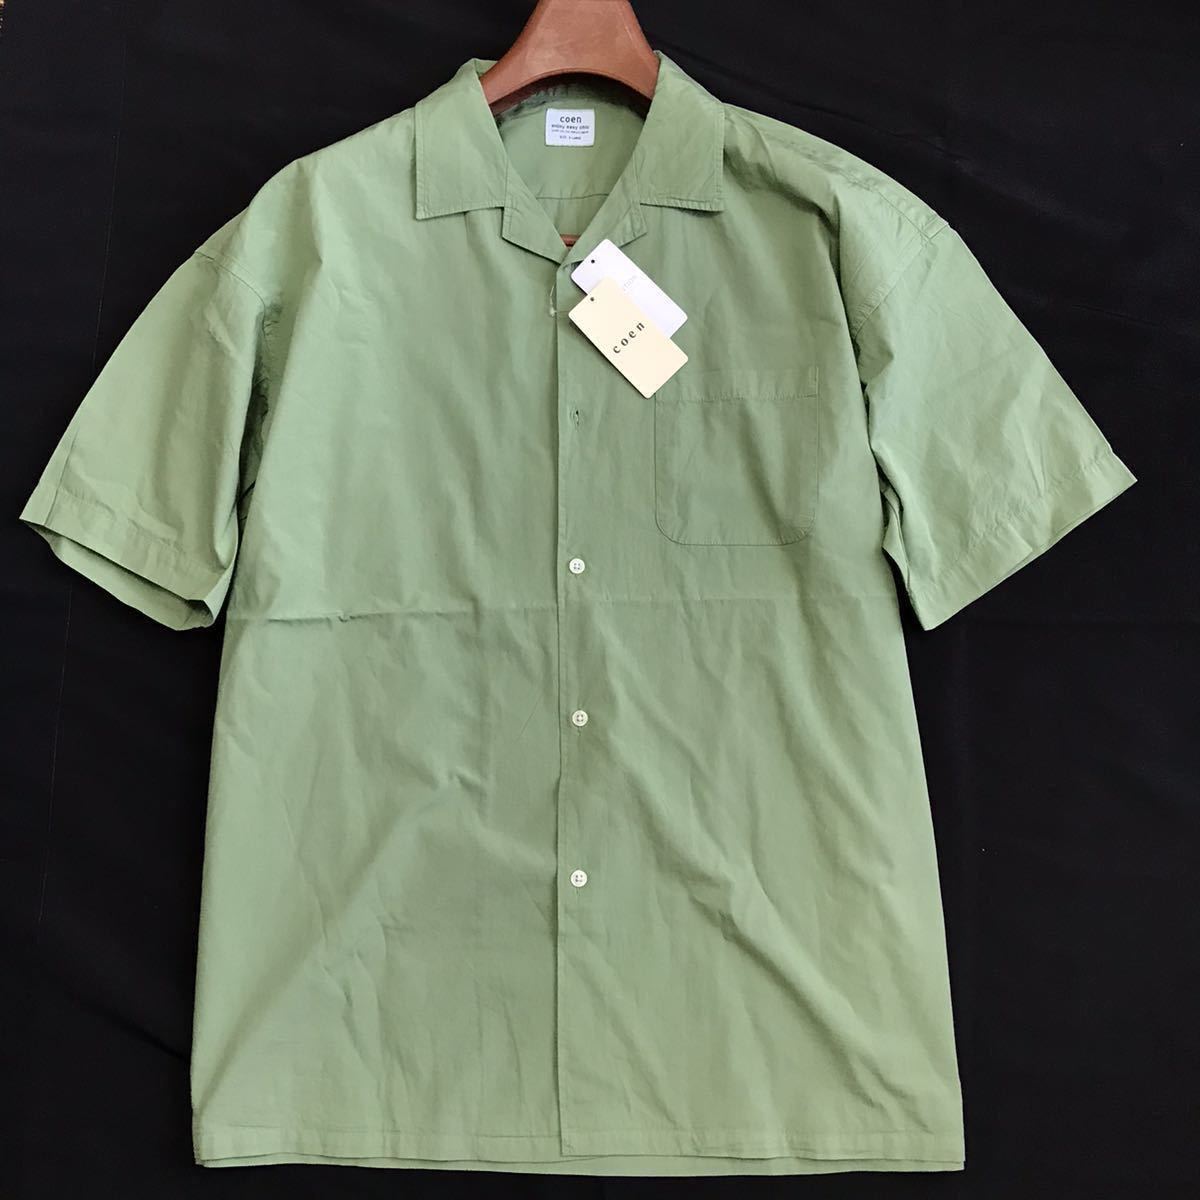 *H399 new goods [ men's XL] United Arrows /ko-en/coen/ short sleeves po pudding open color shirt 